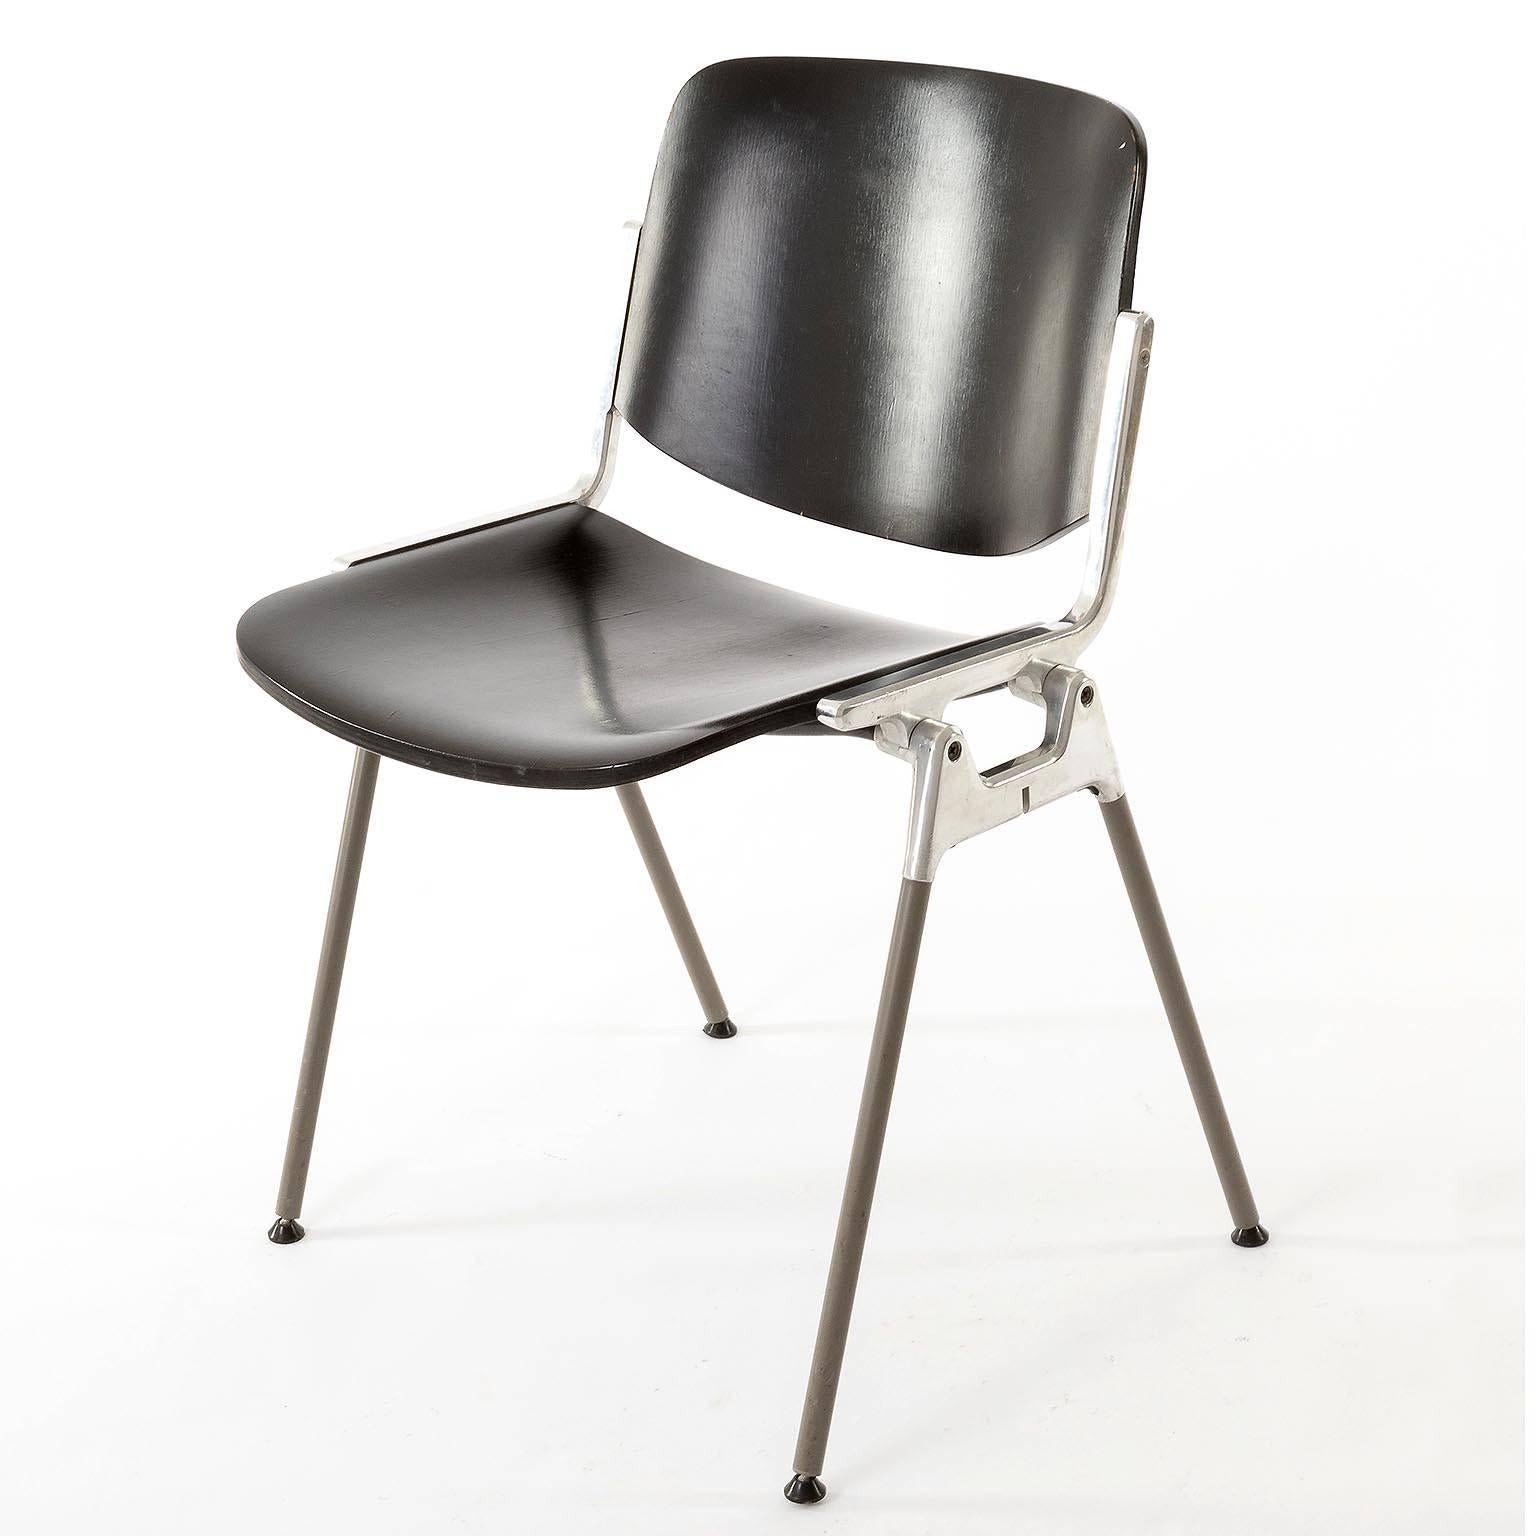 Pair of Italian Chairs Designed by Giancarlo Piretti for Castelli, 1960s (Italienisch)